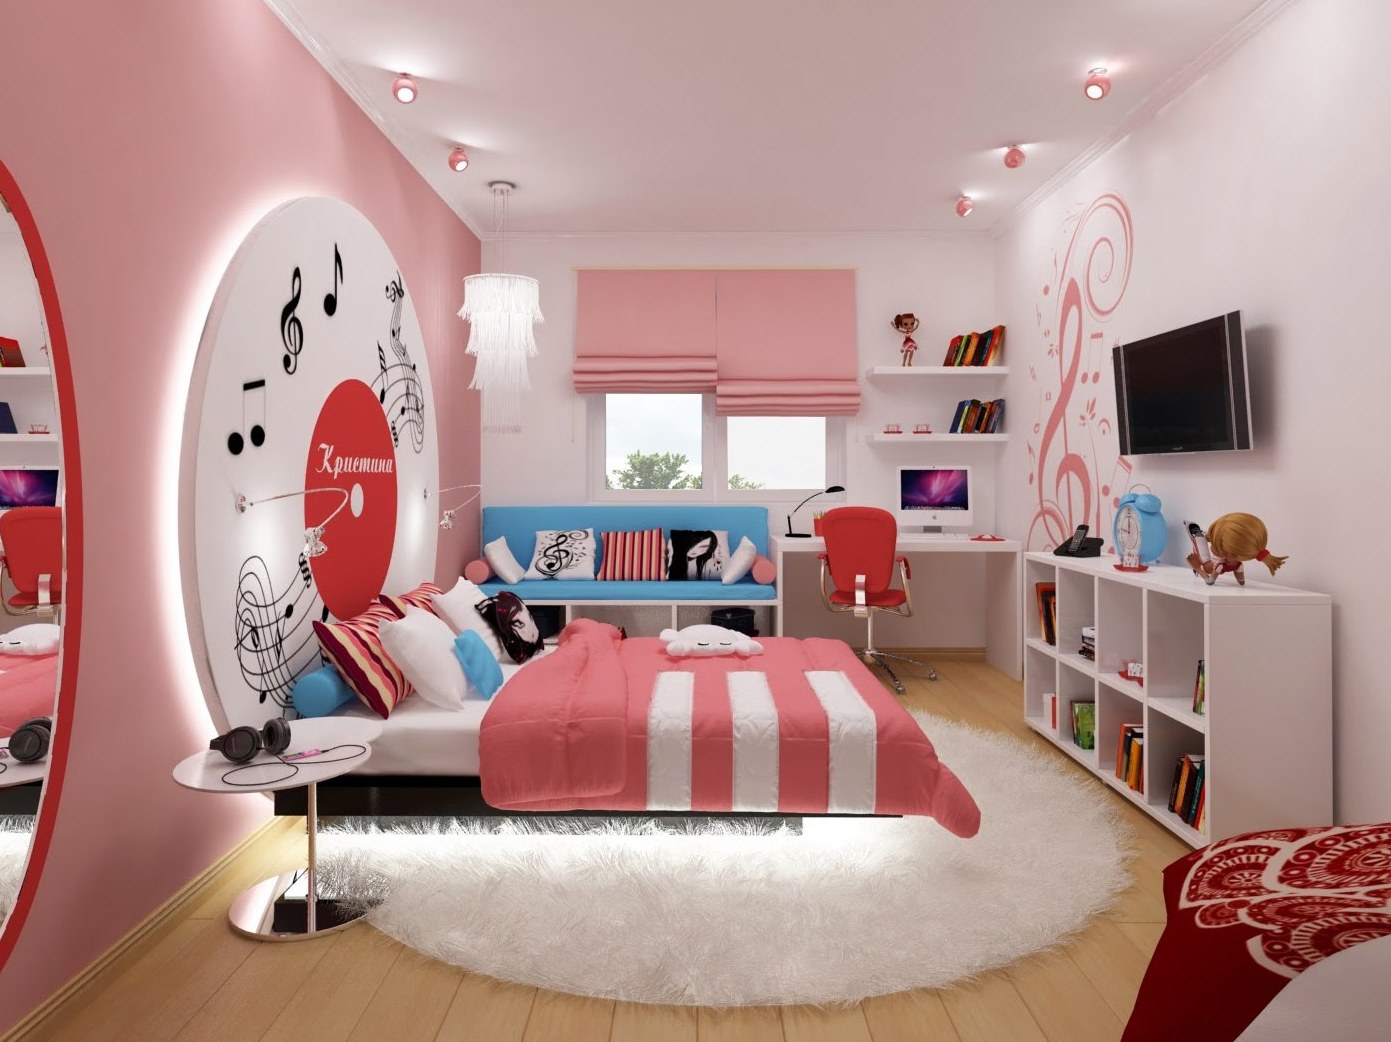 version of the light design of the children's room for the girl